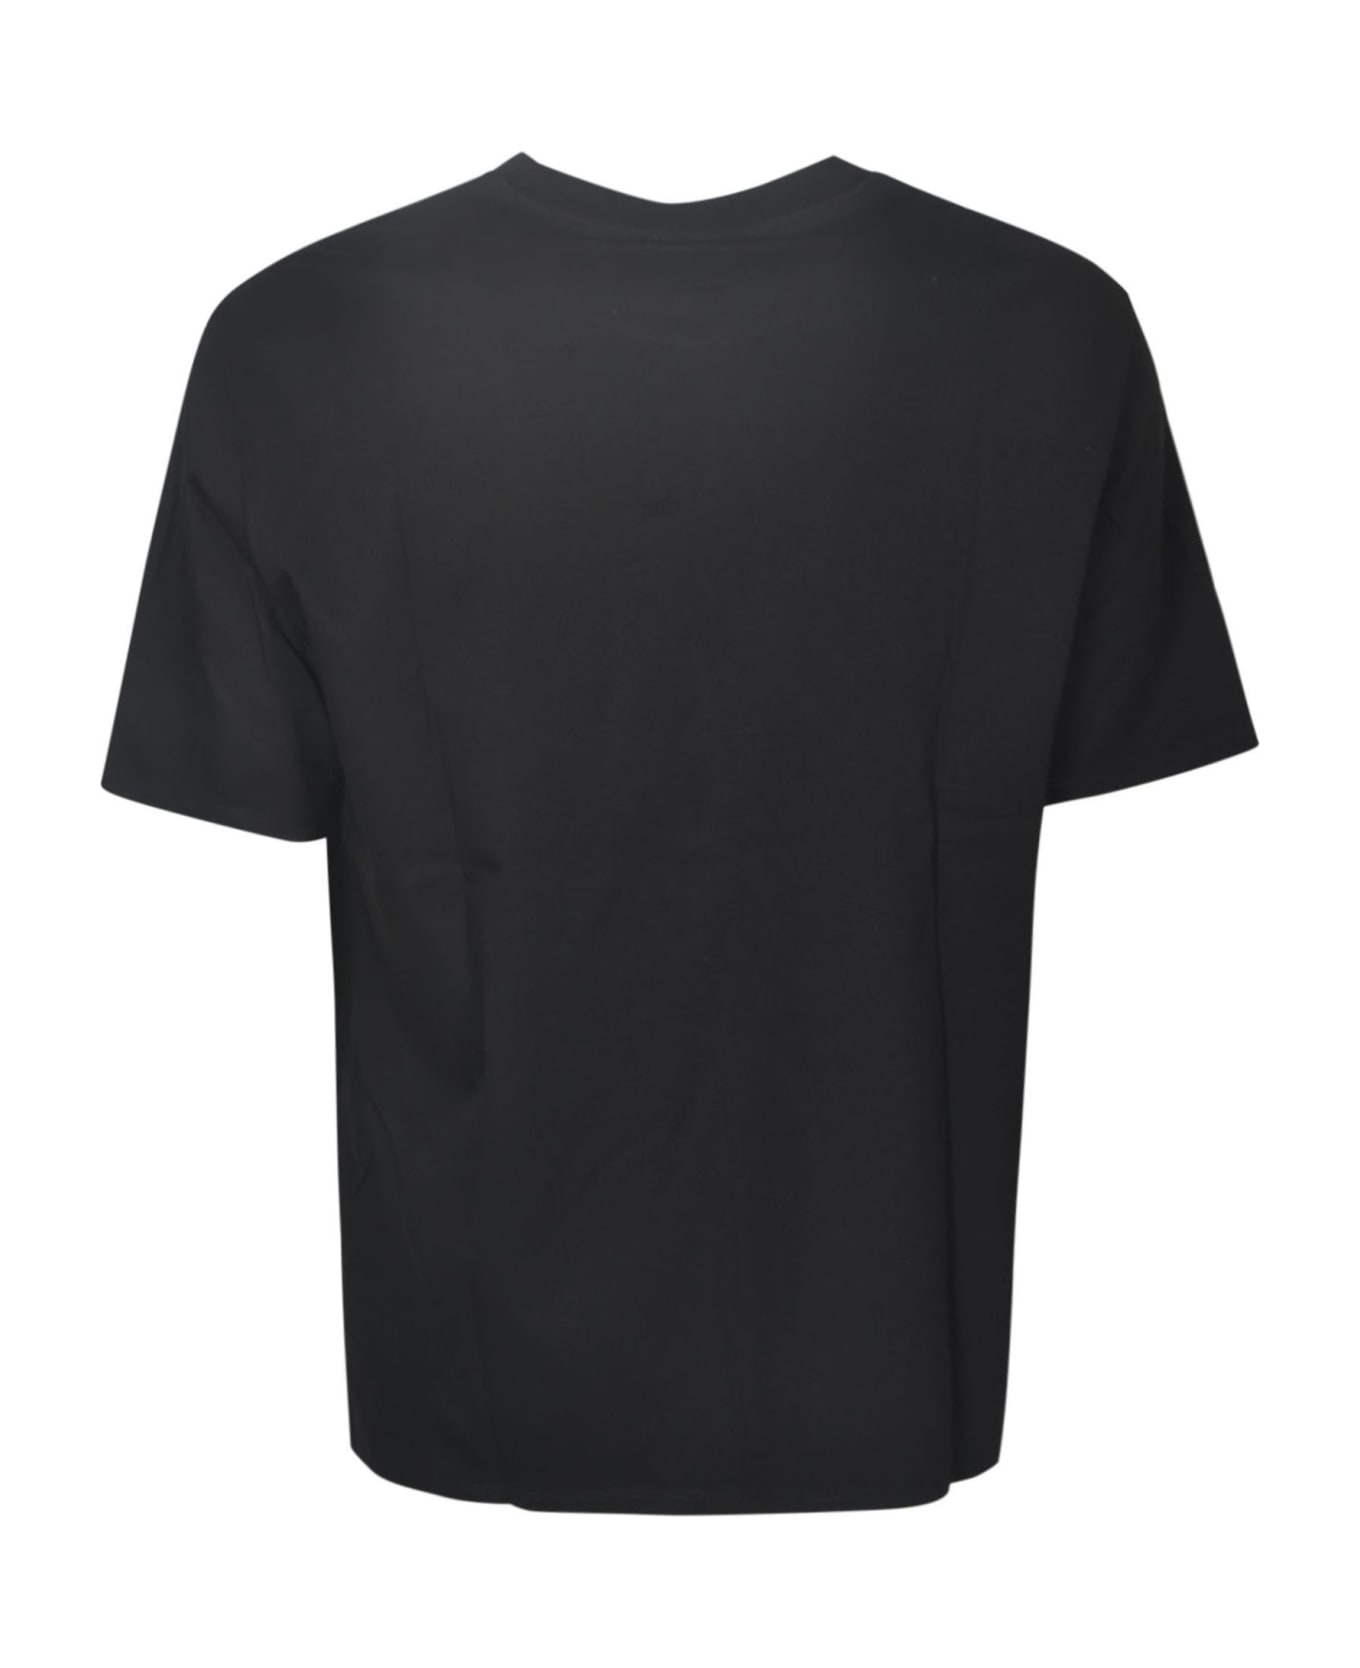 Lanvin Chest Logo Plain T-shirt - Black シャツ